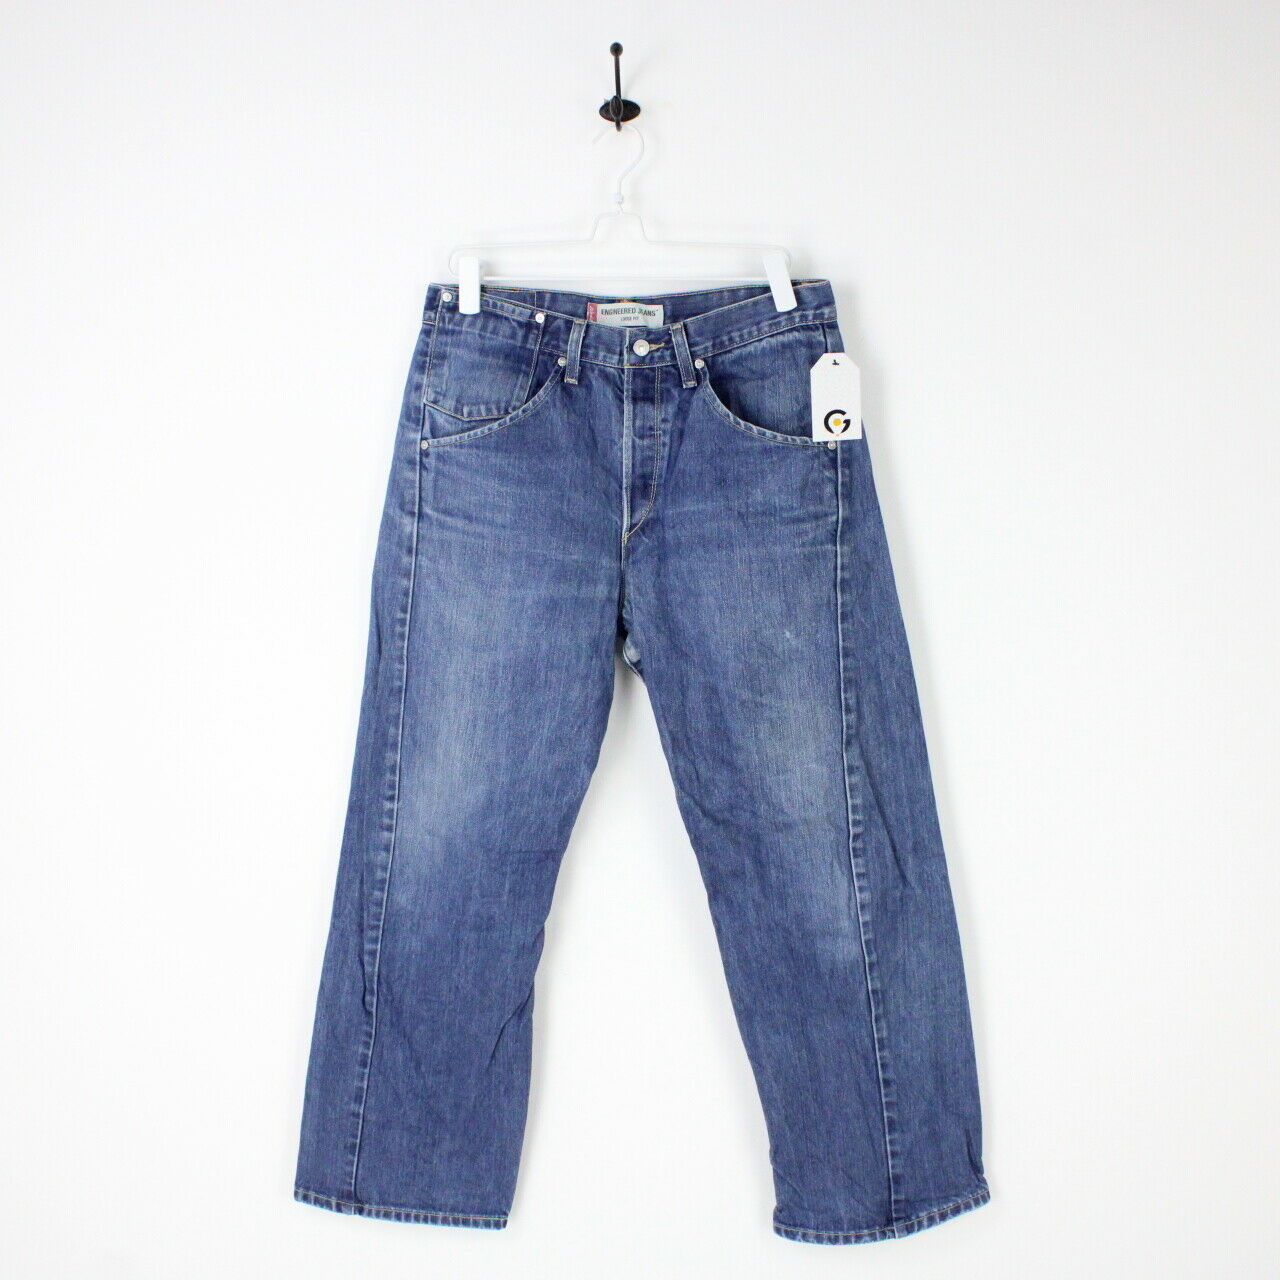 Mens LEVIS Engineered Jeans Mid Blue | W32 L30